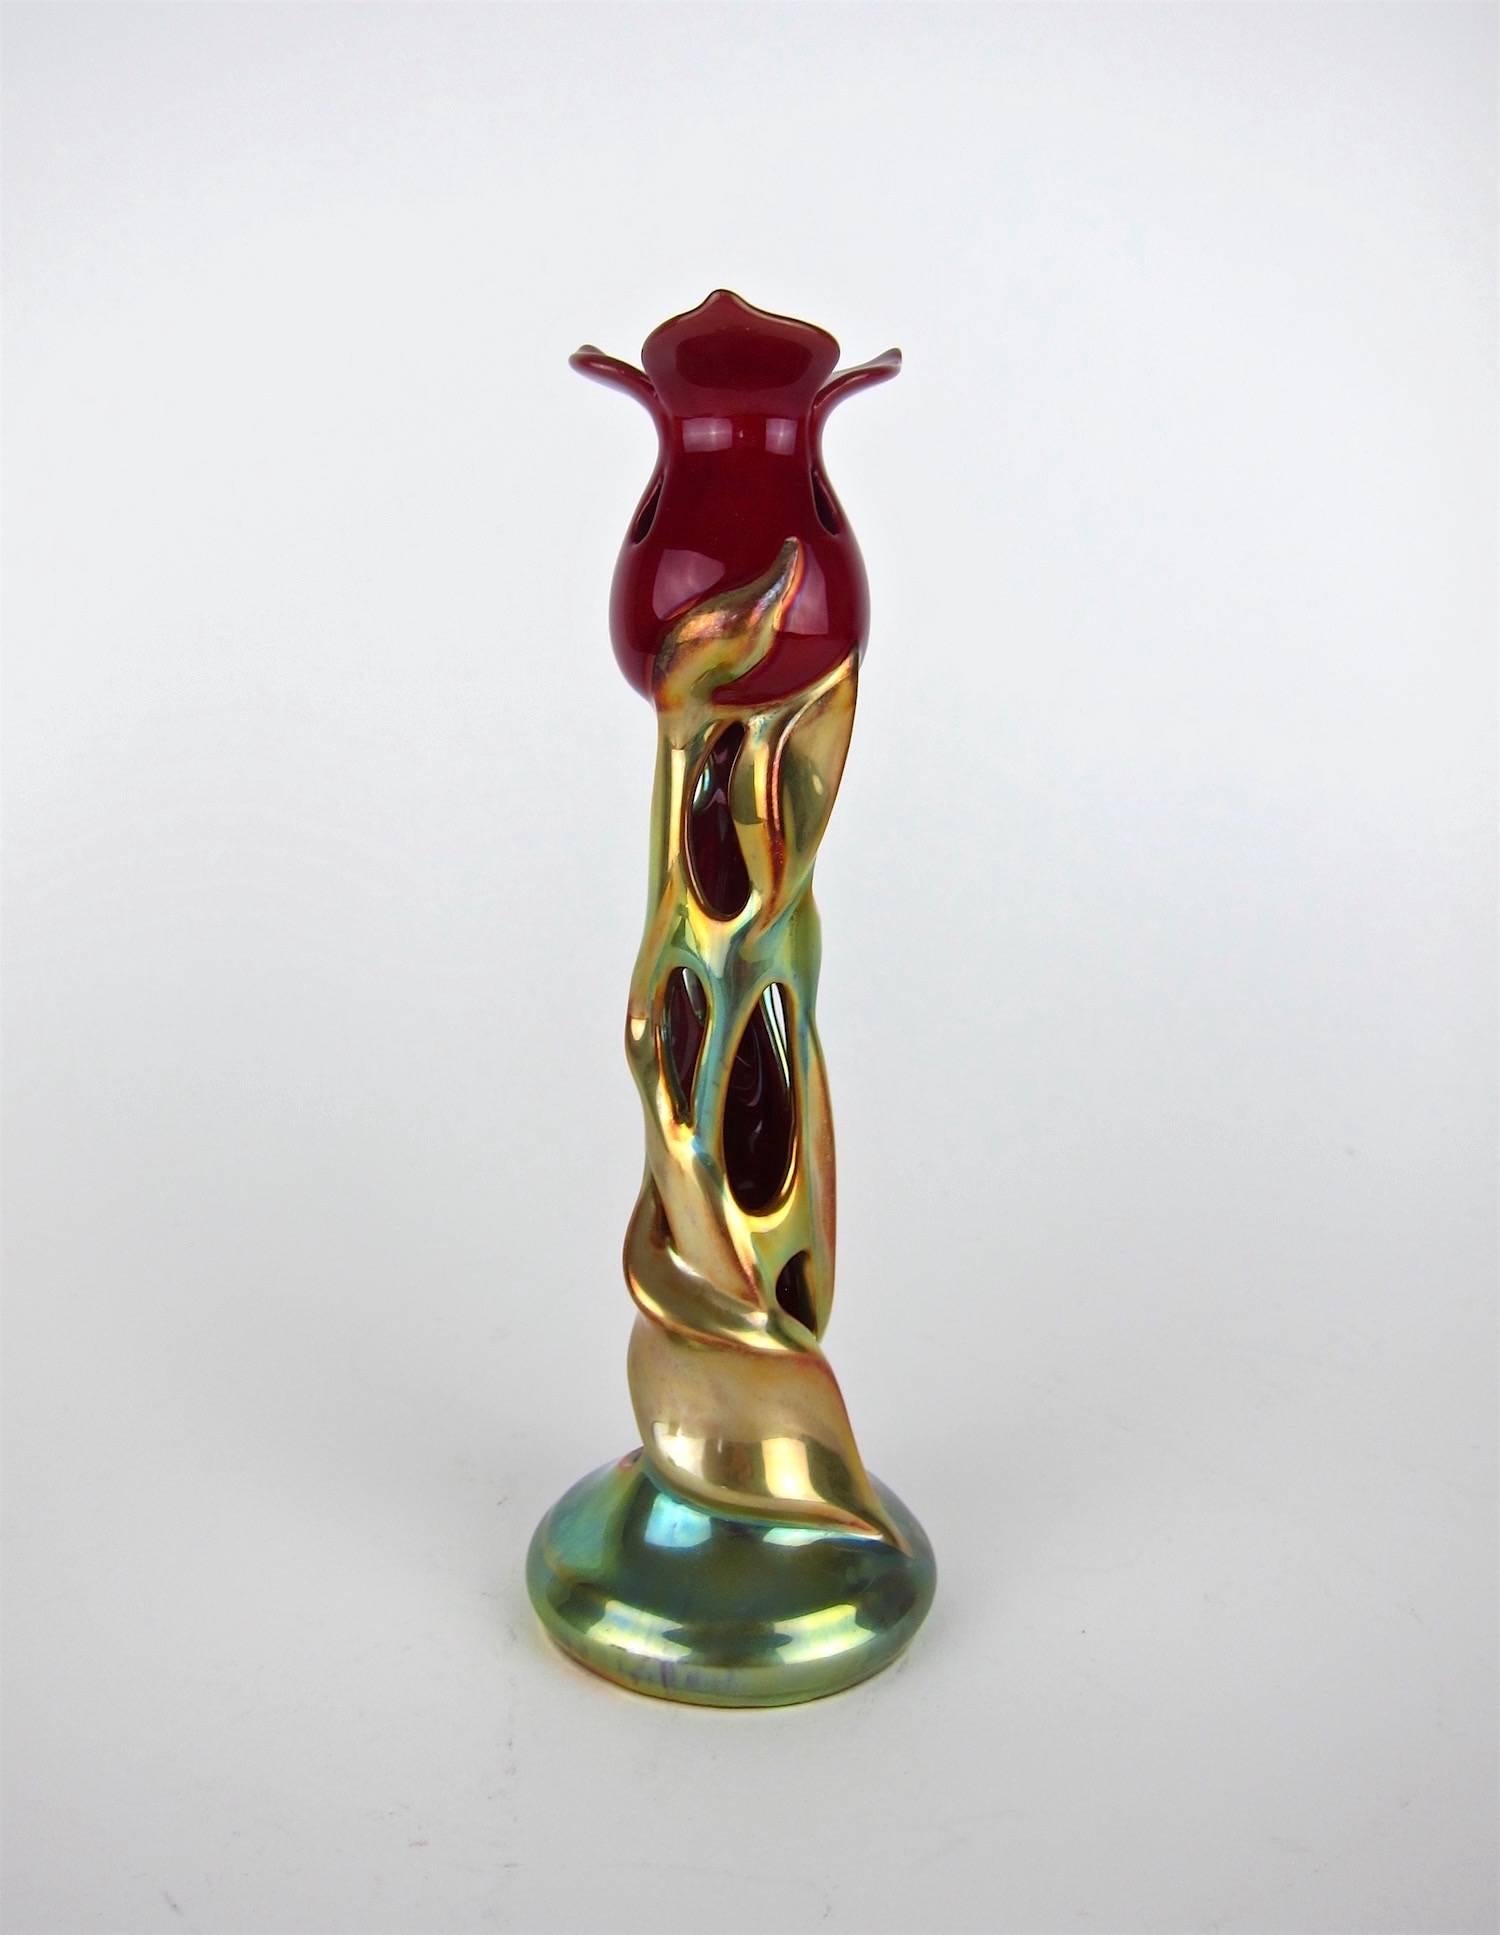 Hungarian Zsolnay Art Nouveau Porcelain Tulip Candlestick with Eosin Glaze